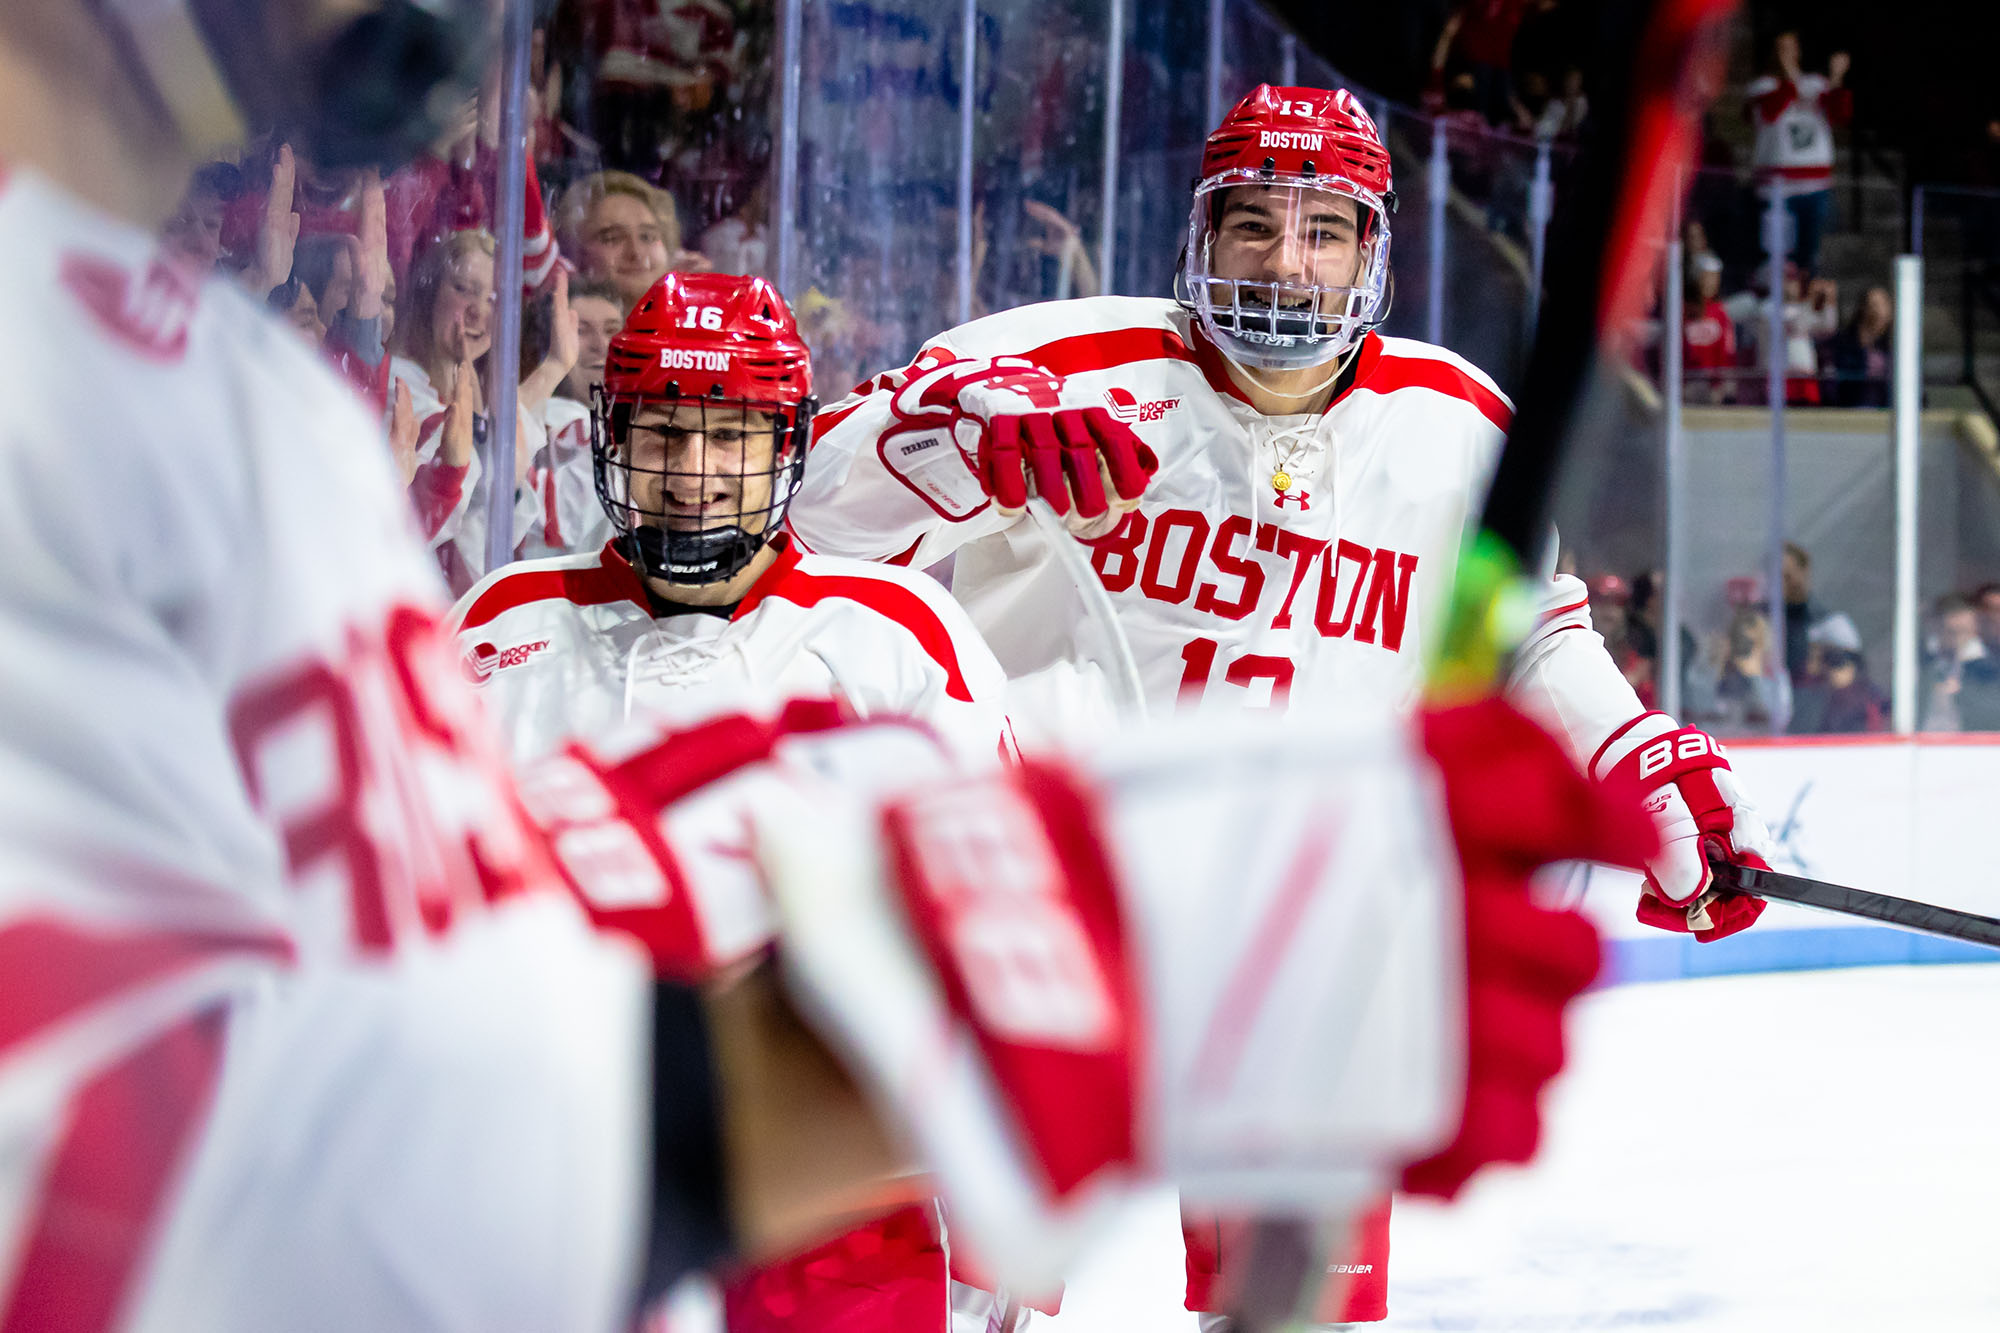 BU wins Hockey East championship - The Boston Globe